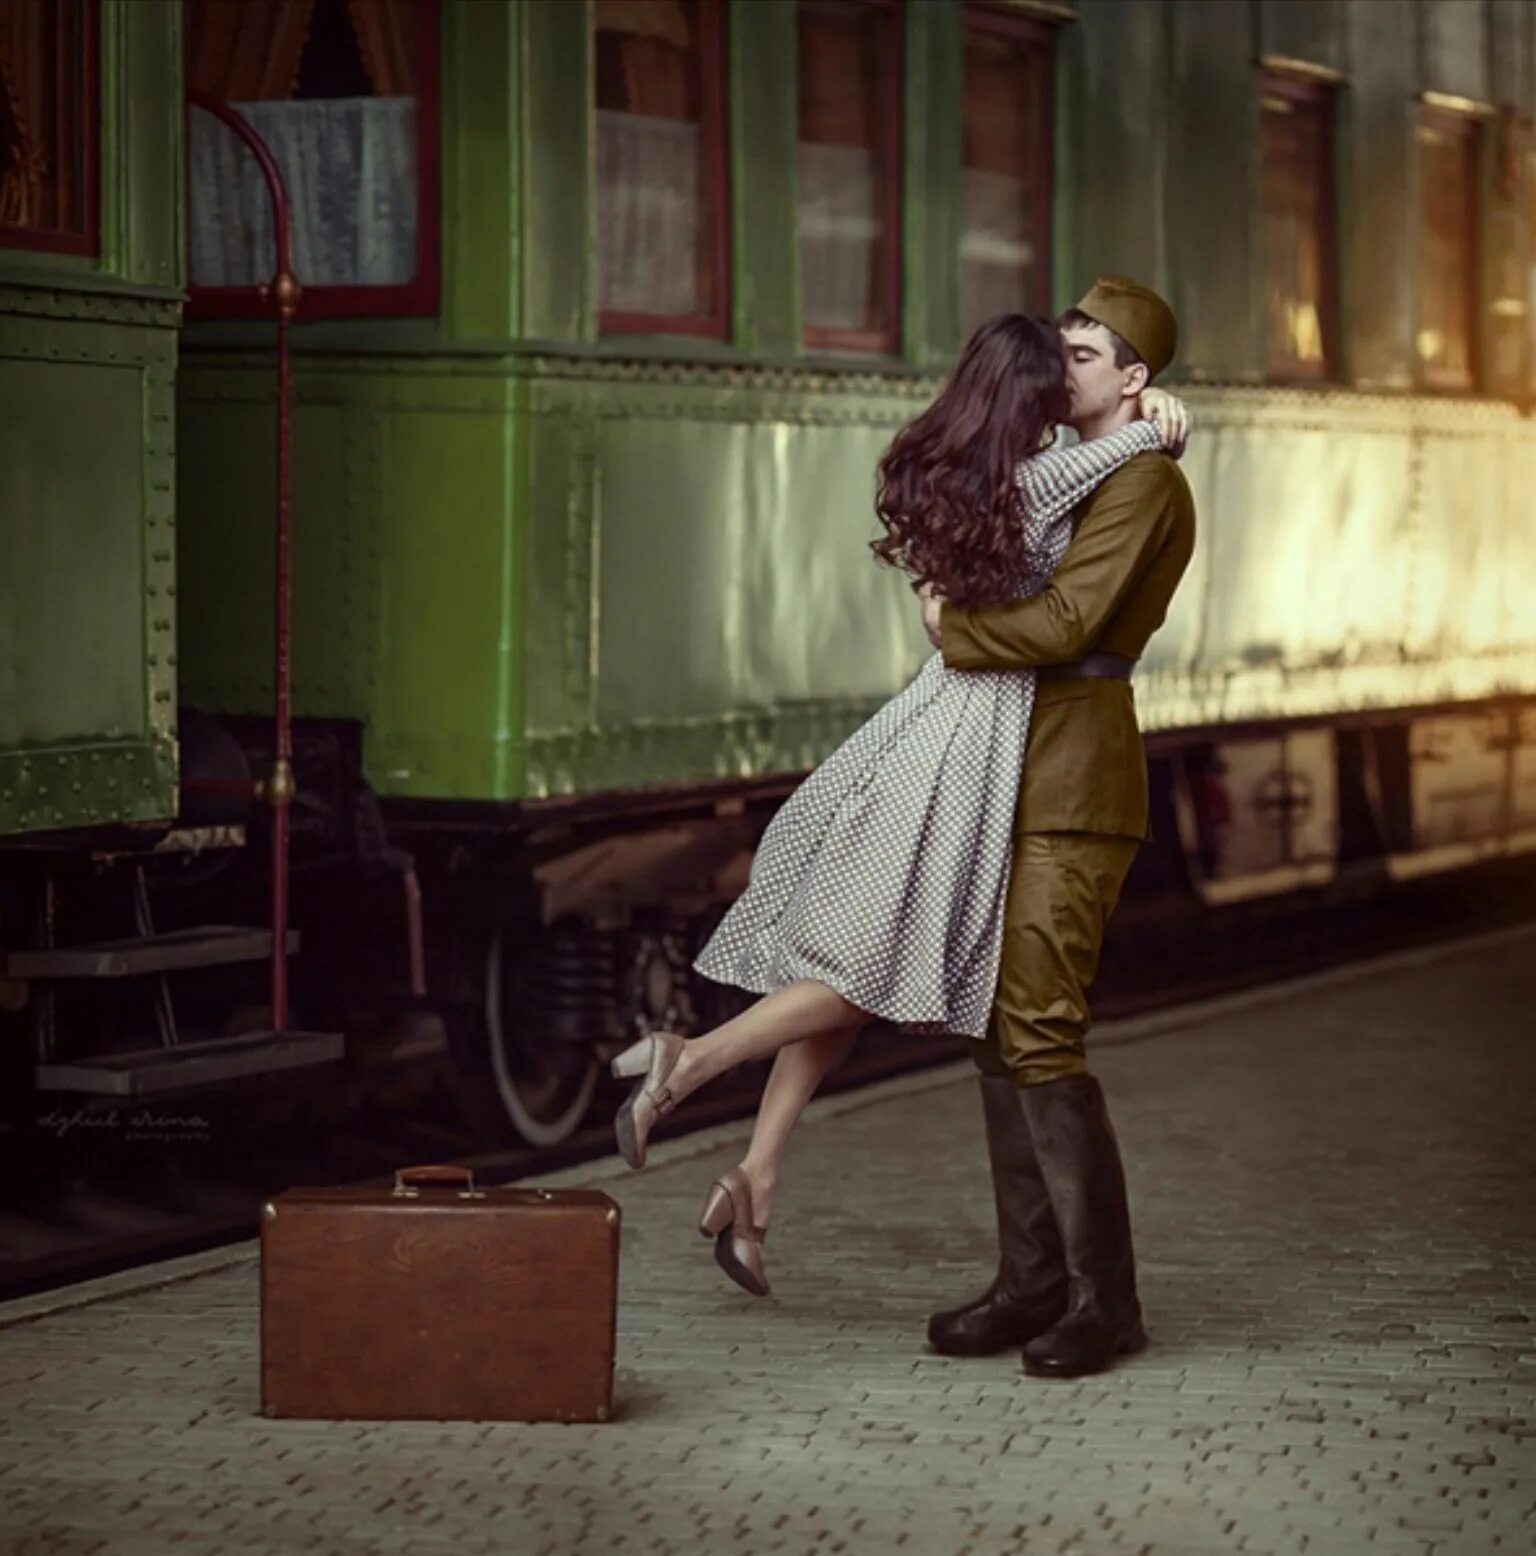 Провожала поля мужа. Встреча на вокзале. Встреча на перроне. Поцелуй на вокзале. Мужчина и женщина на вокзале.